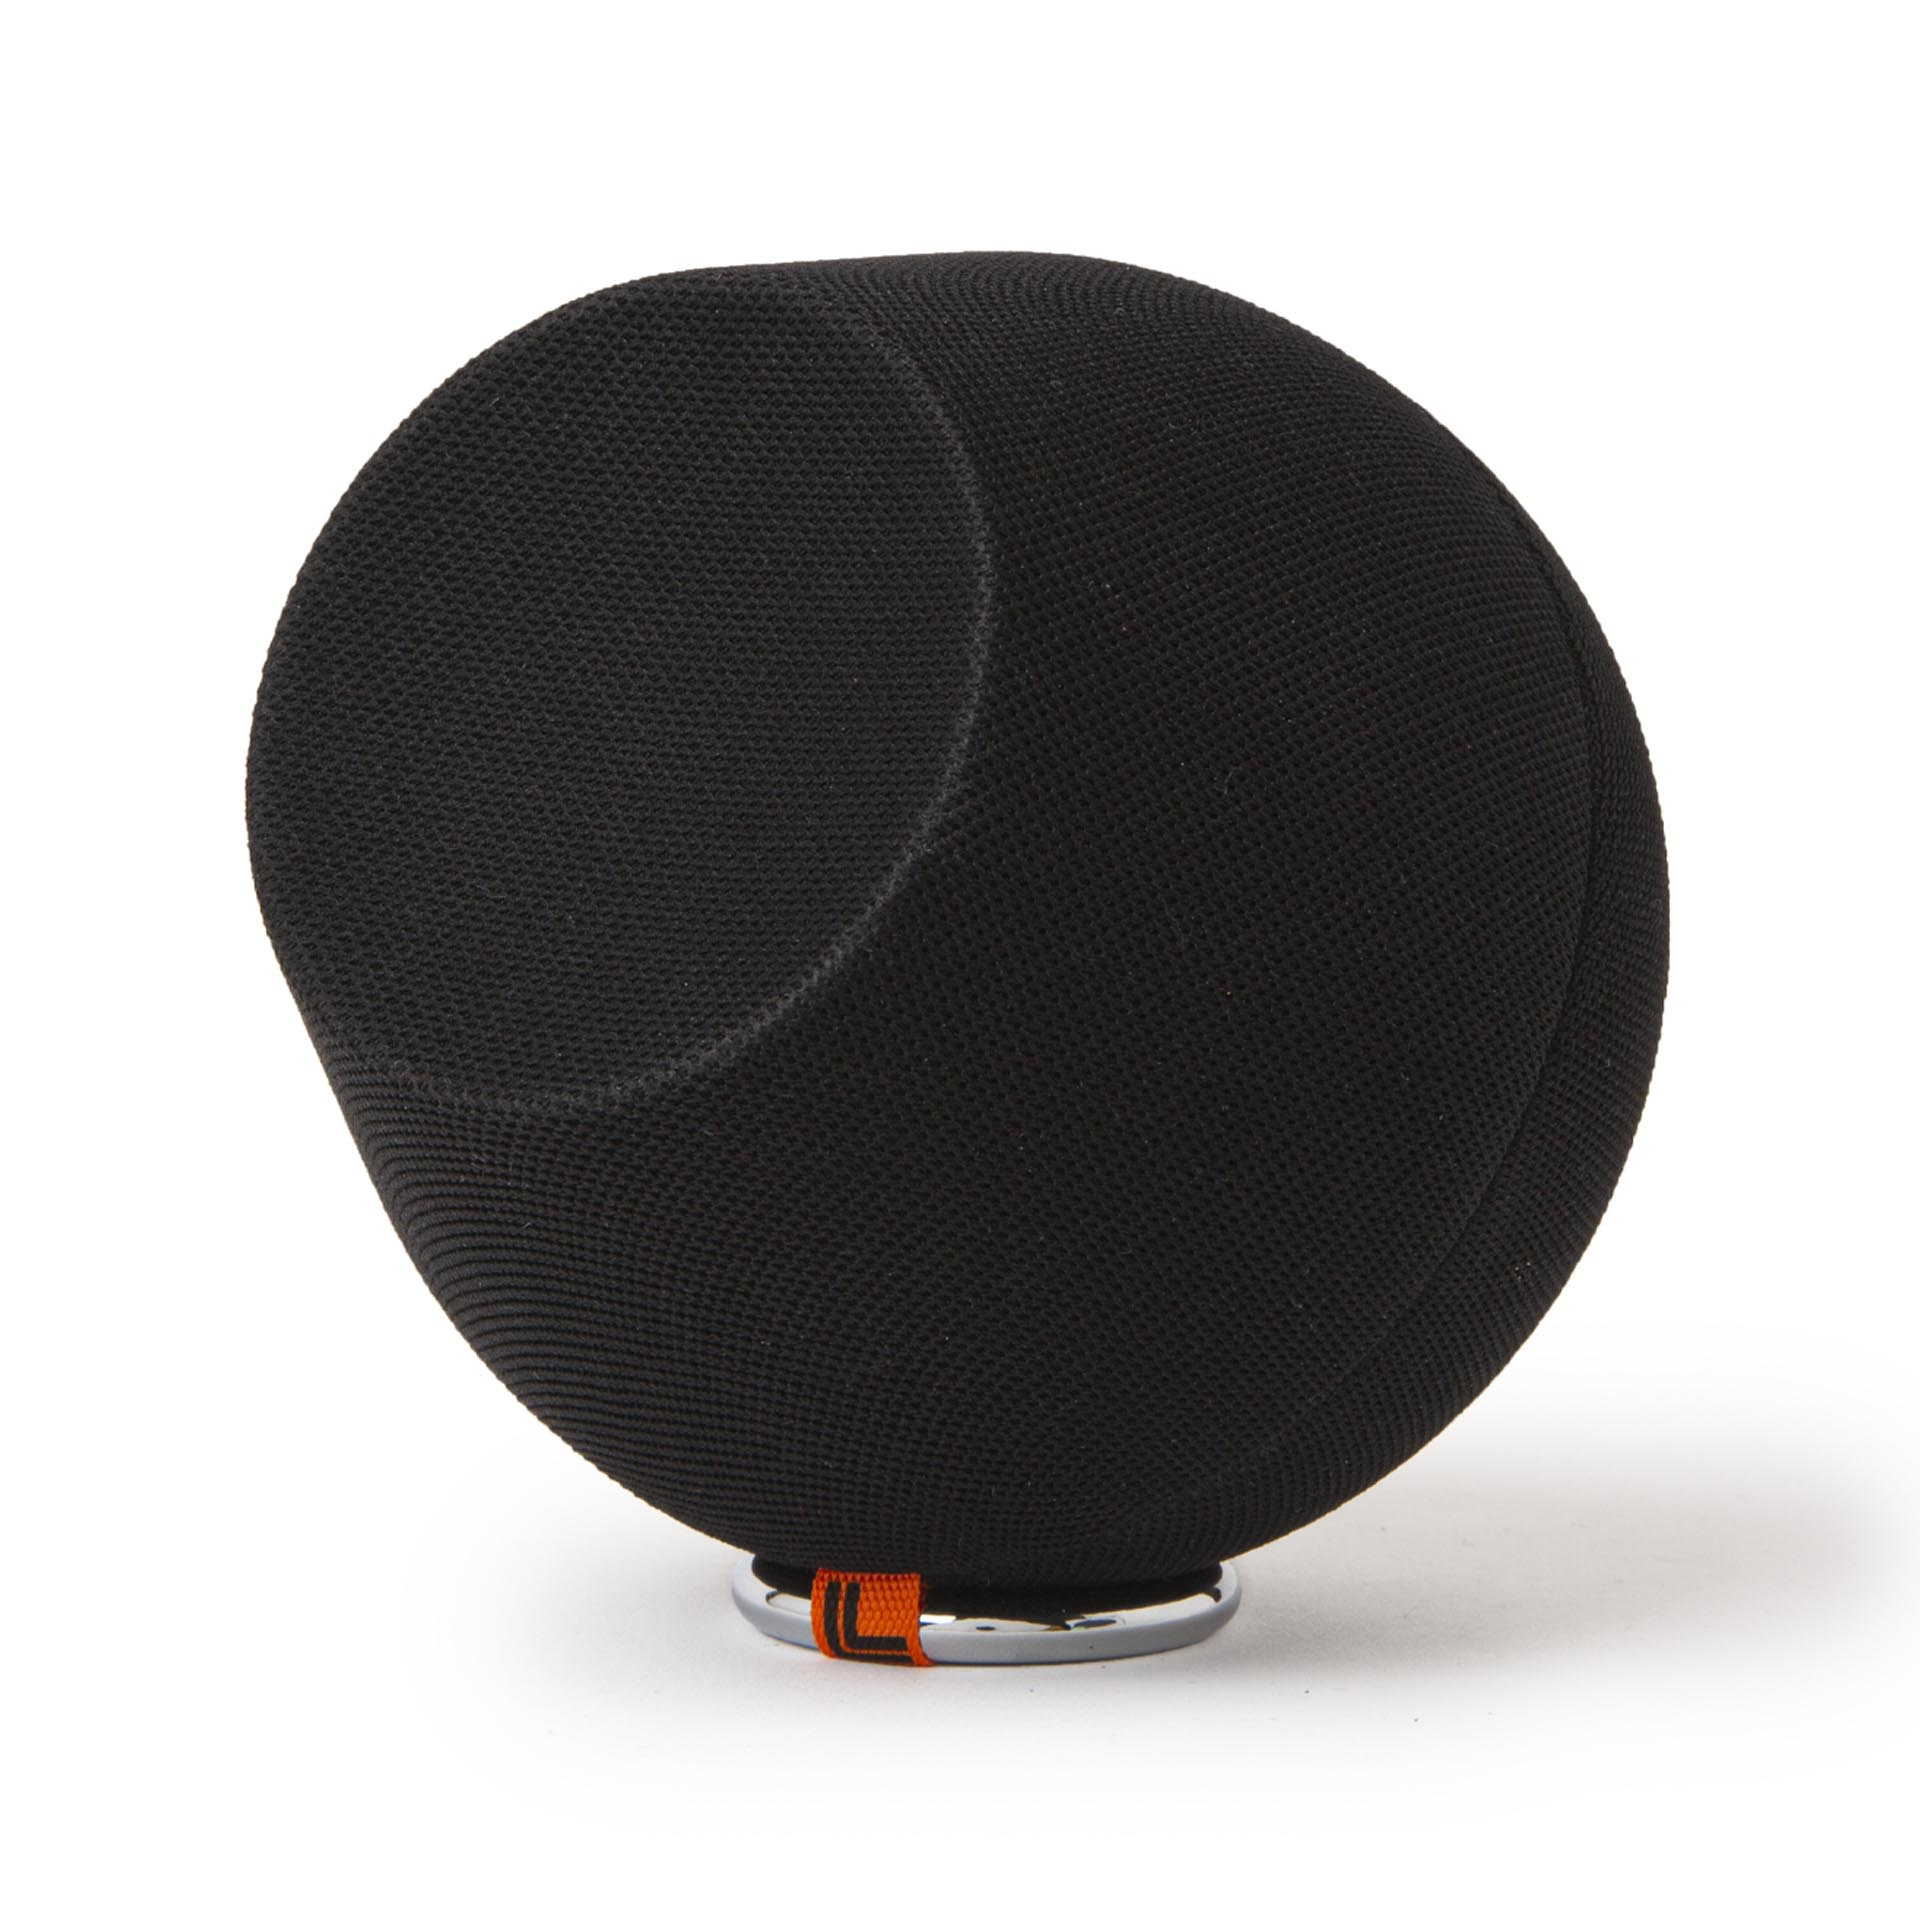 Cassa Speaker Bluetooth impermeabile 360°, , large